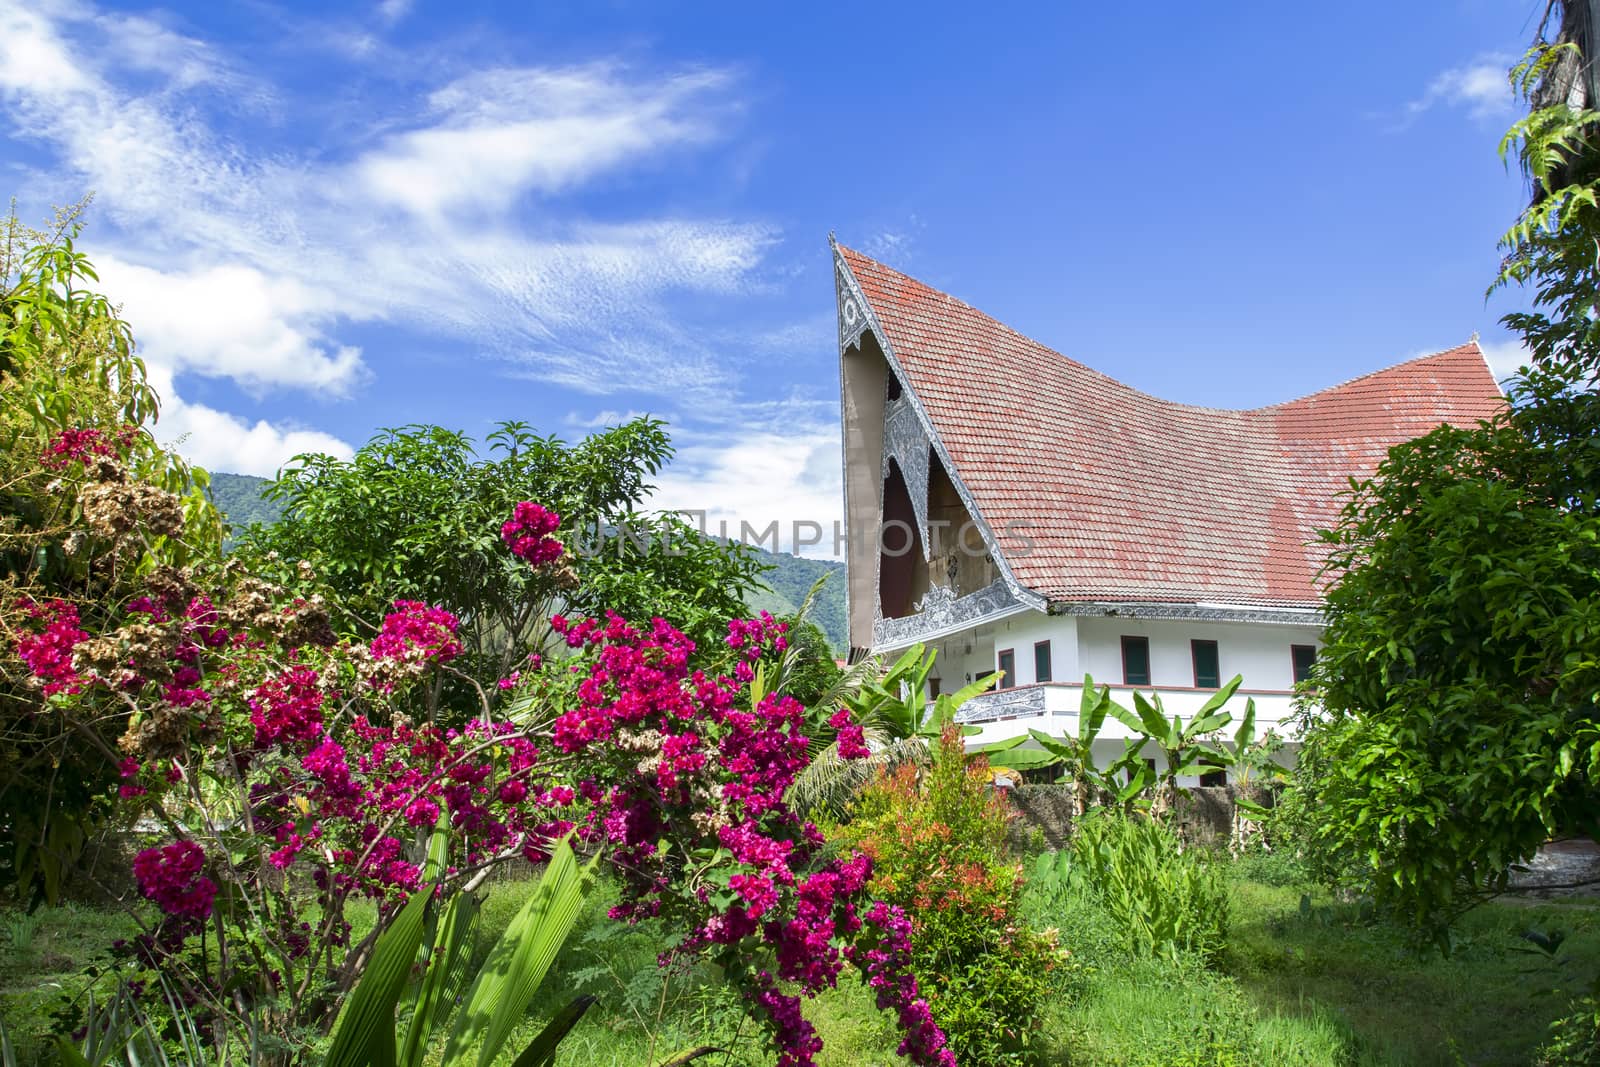 Batak Style House. Samosir Island North Sumatra, Indonesia.